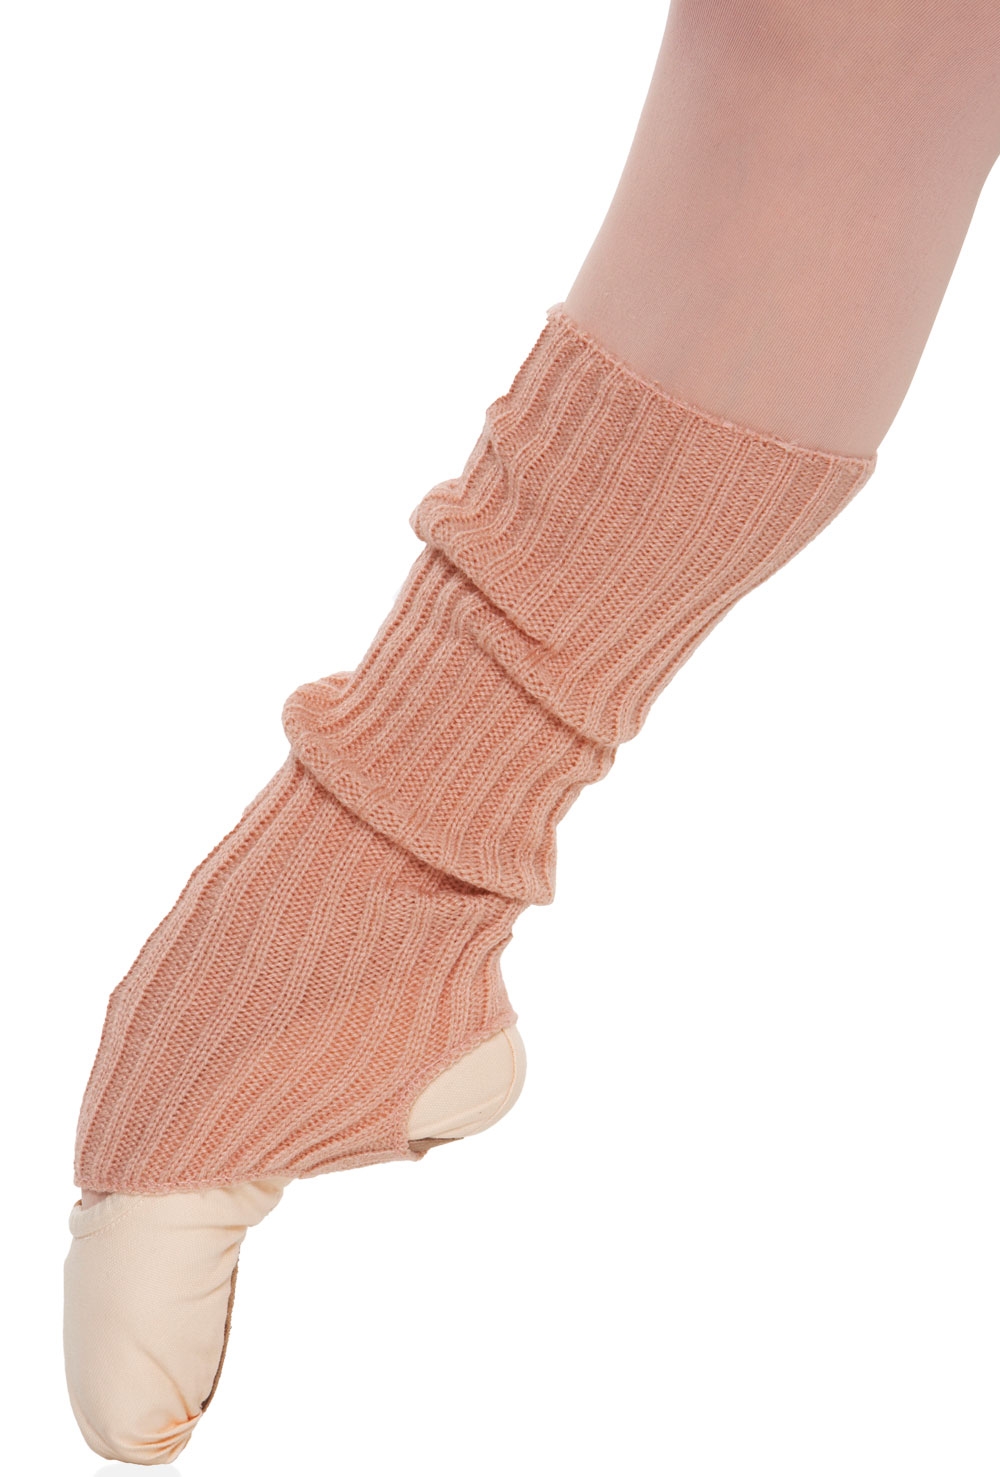 40 cm Made in Spain Intermezzo Damen Leg-Warmers 2010 Precal 100% Acryl 